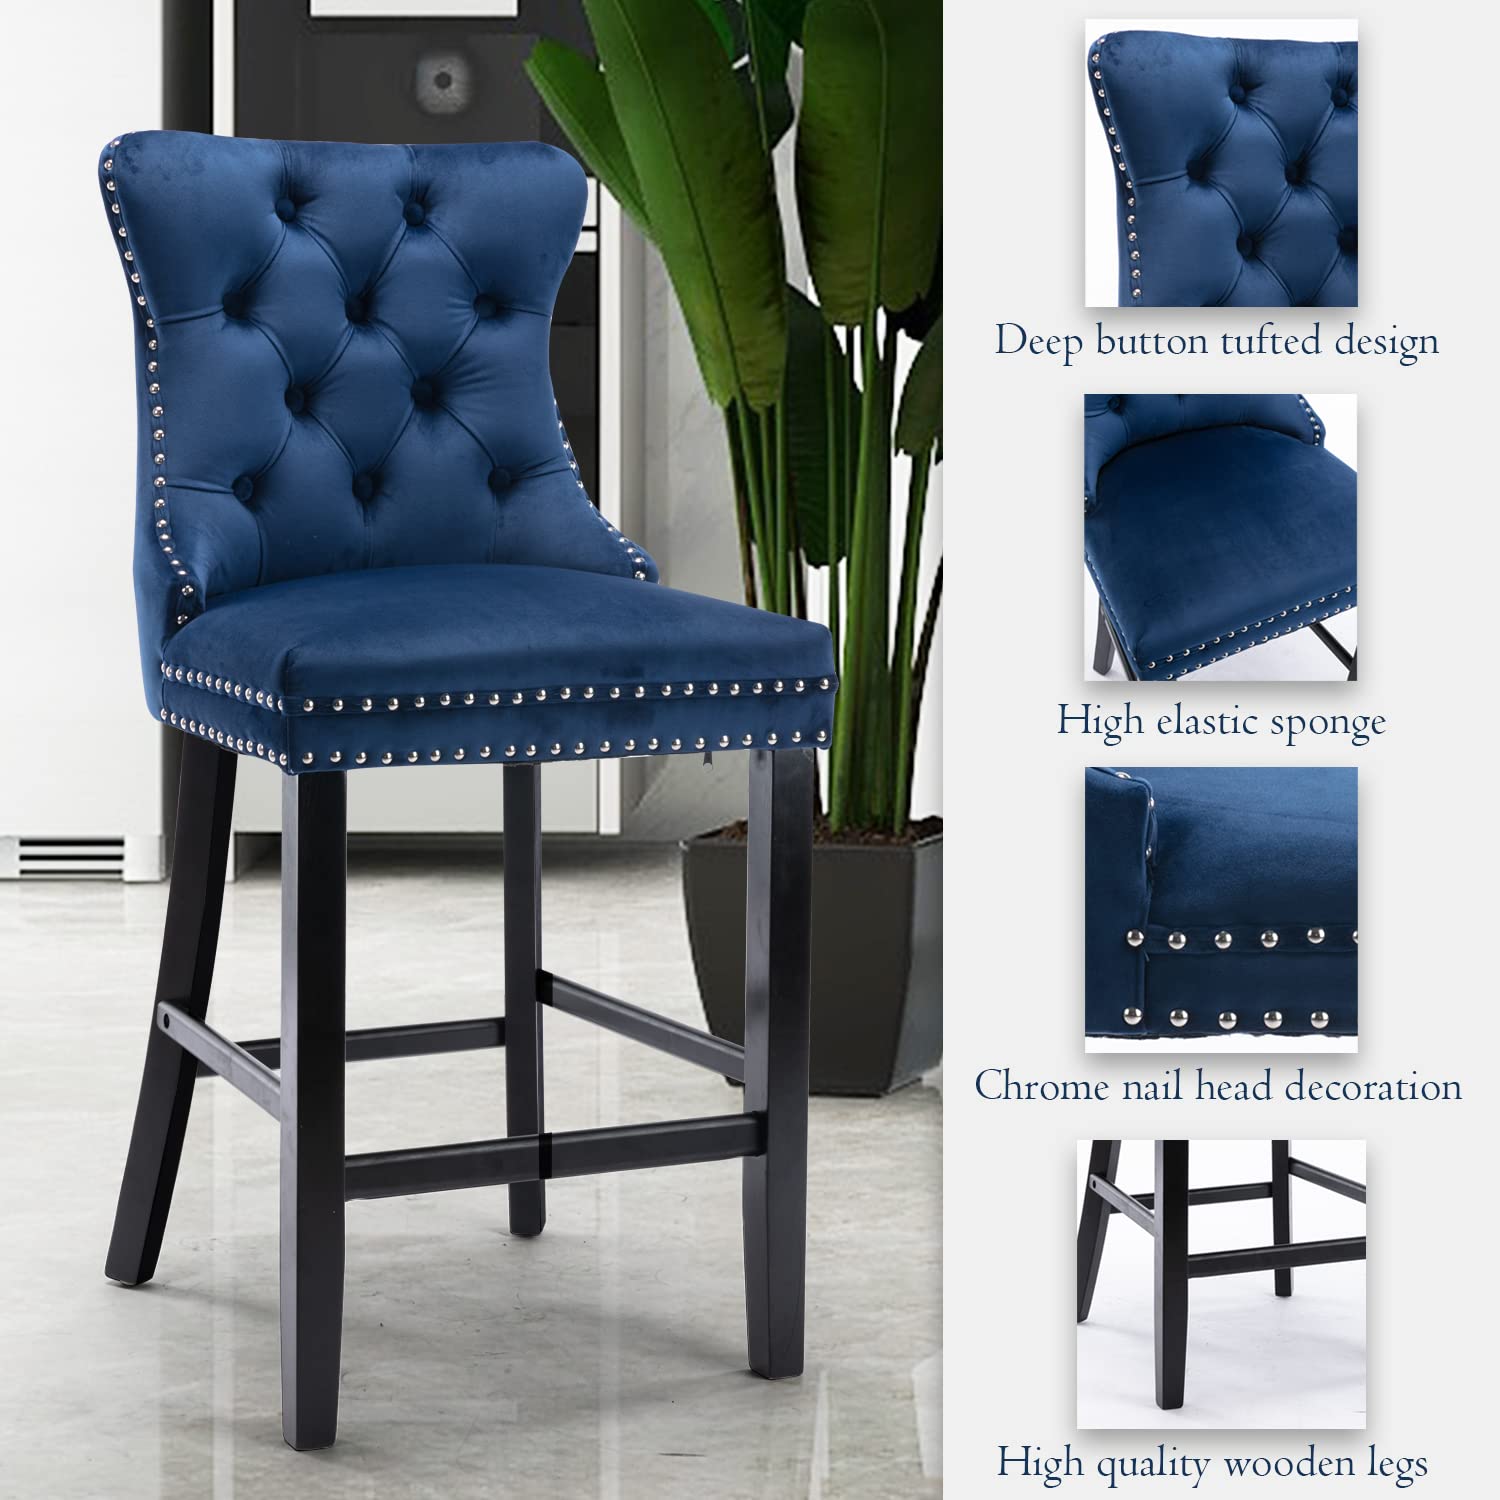 2X Velvet Bar Stools with Studs Trim Wooden Legs Tufted Kitchen Chairs Kitchen-Blue Odin Furniture